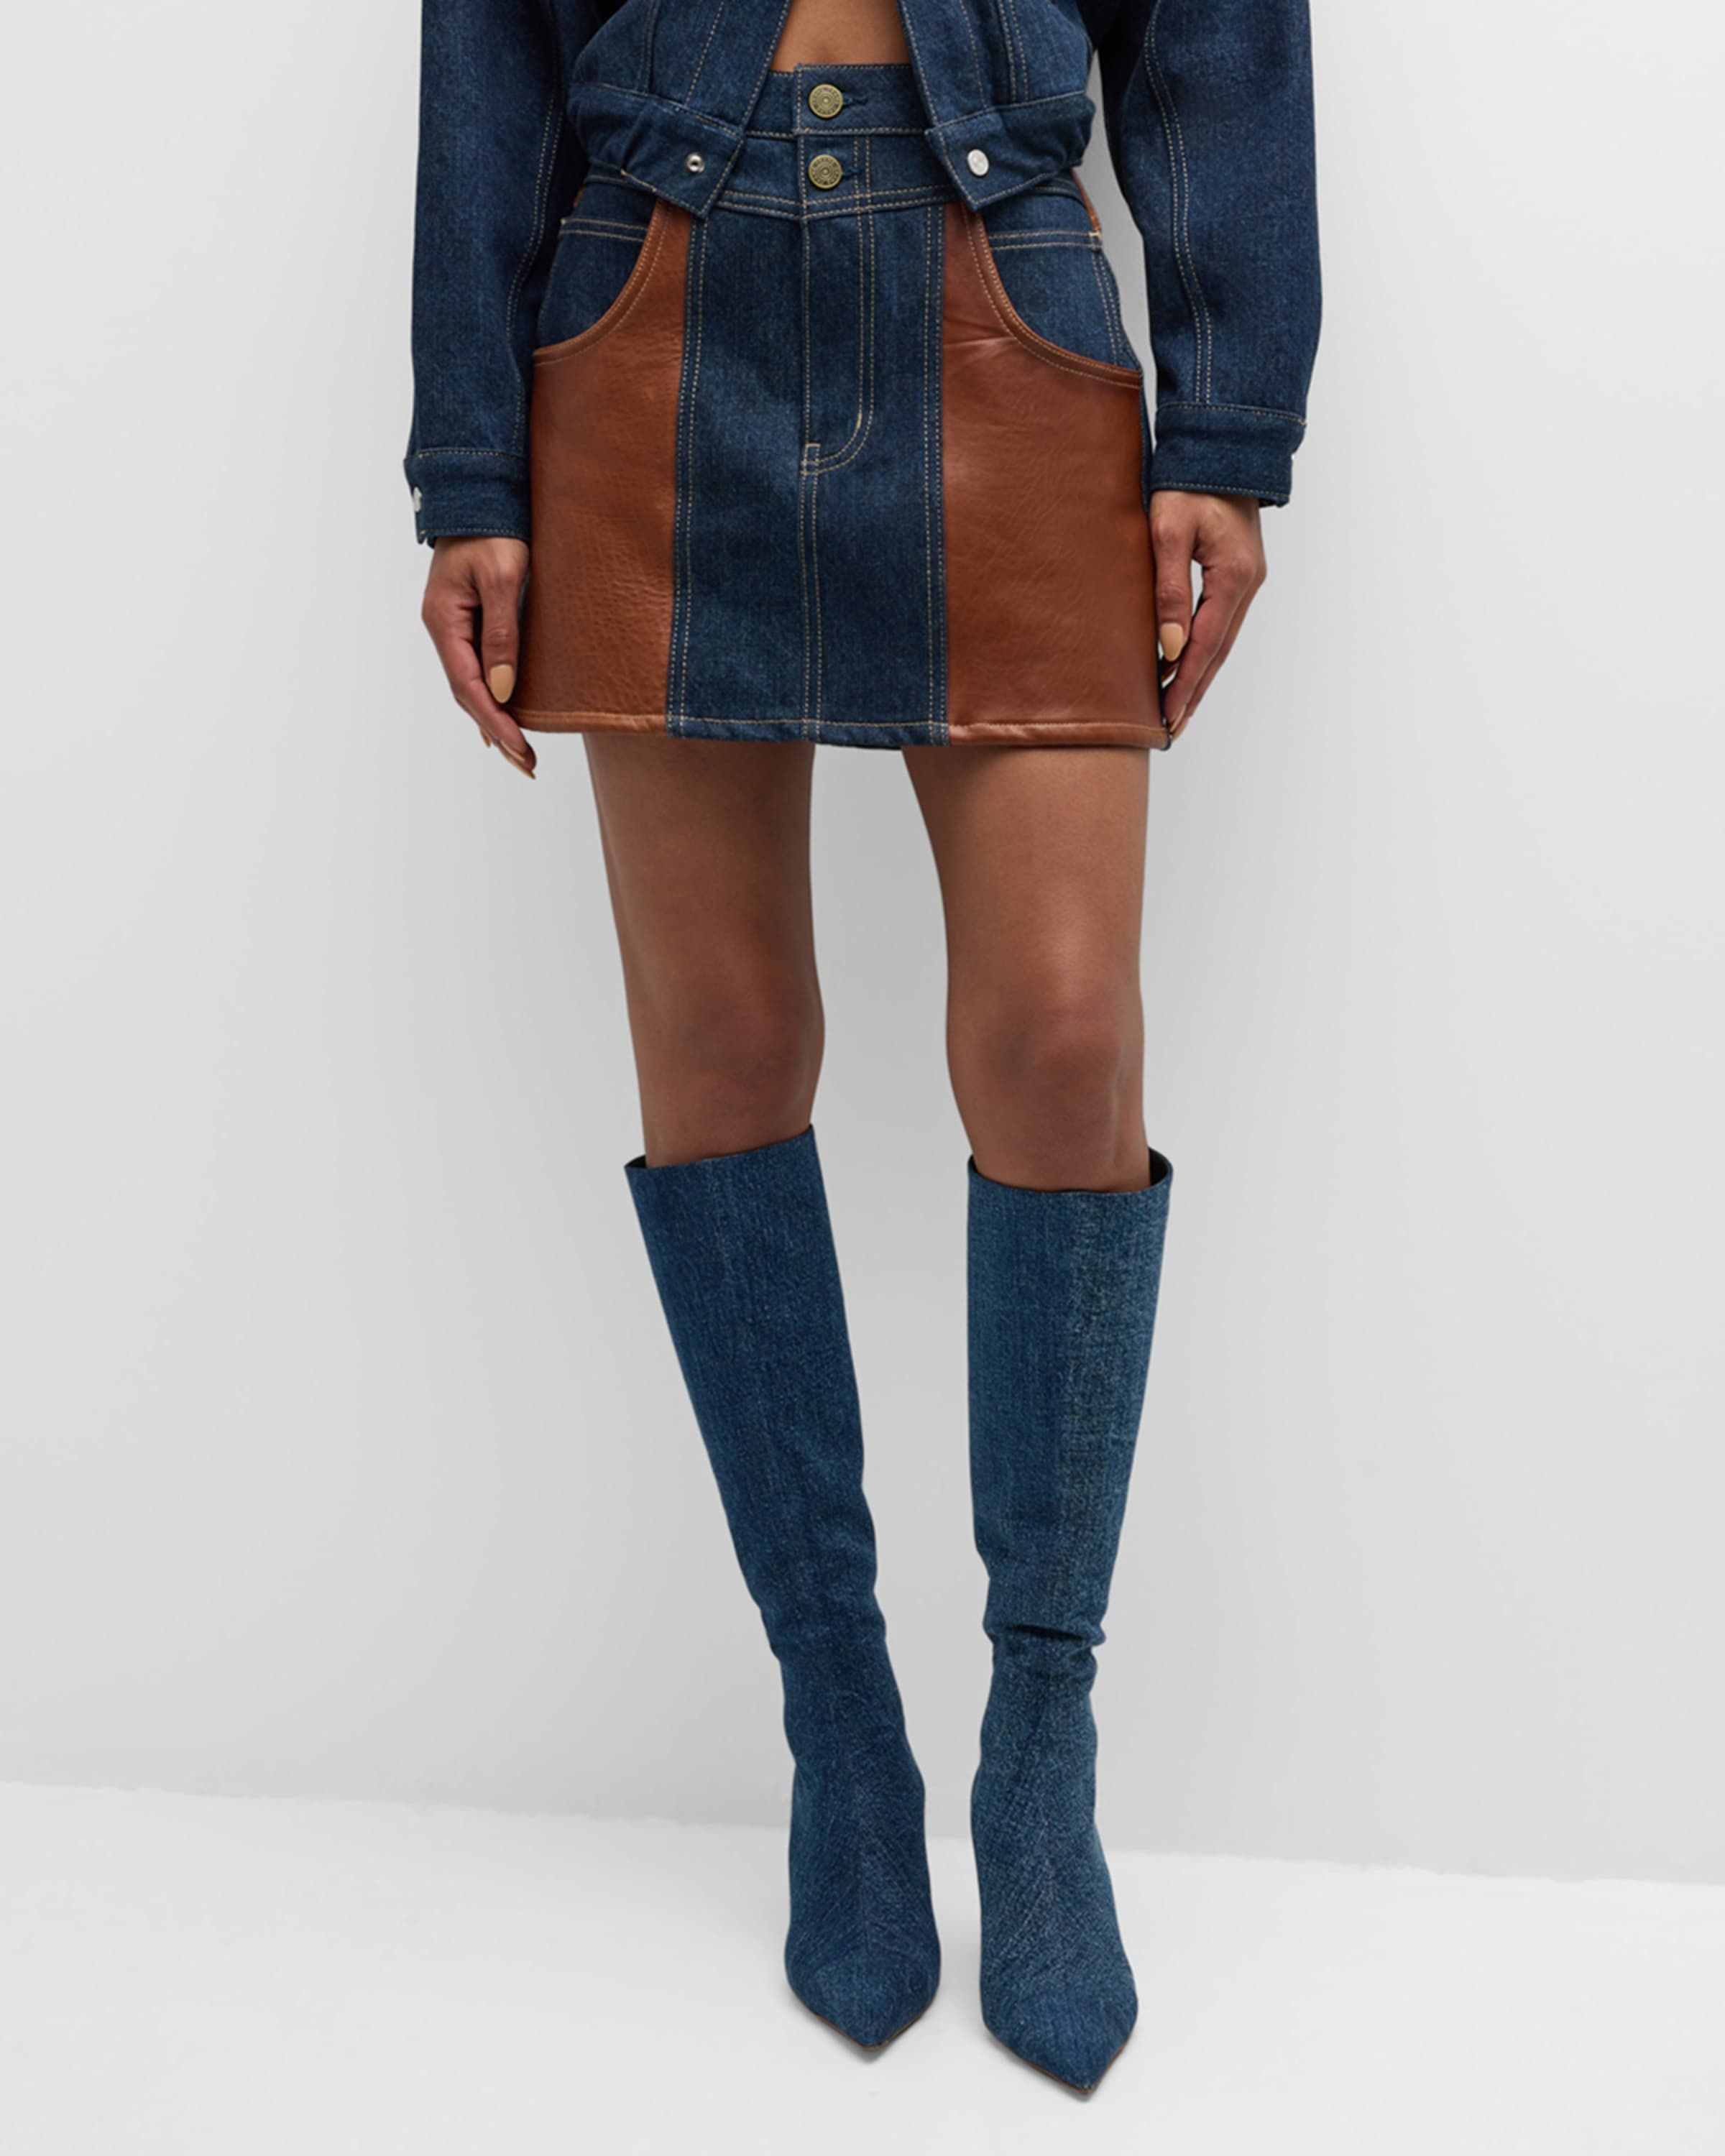 Atelier Denim and Leather Mini Skirt - 2